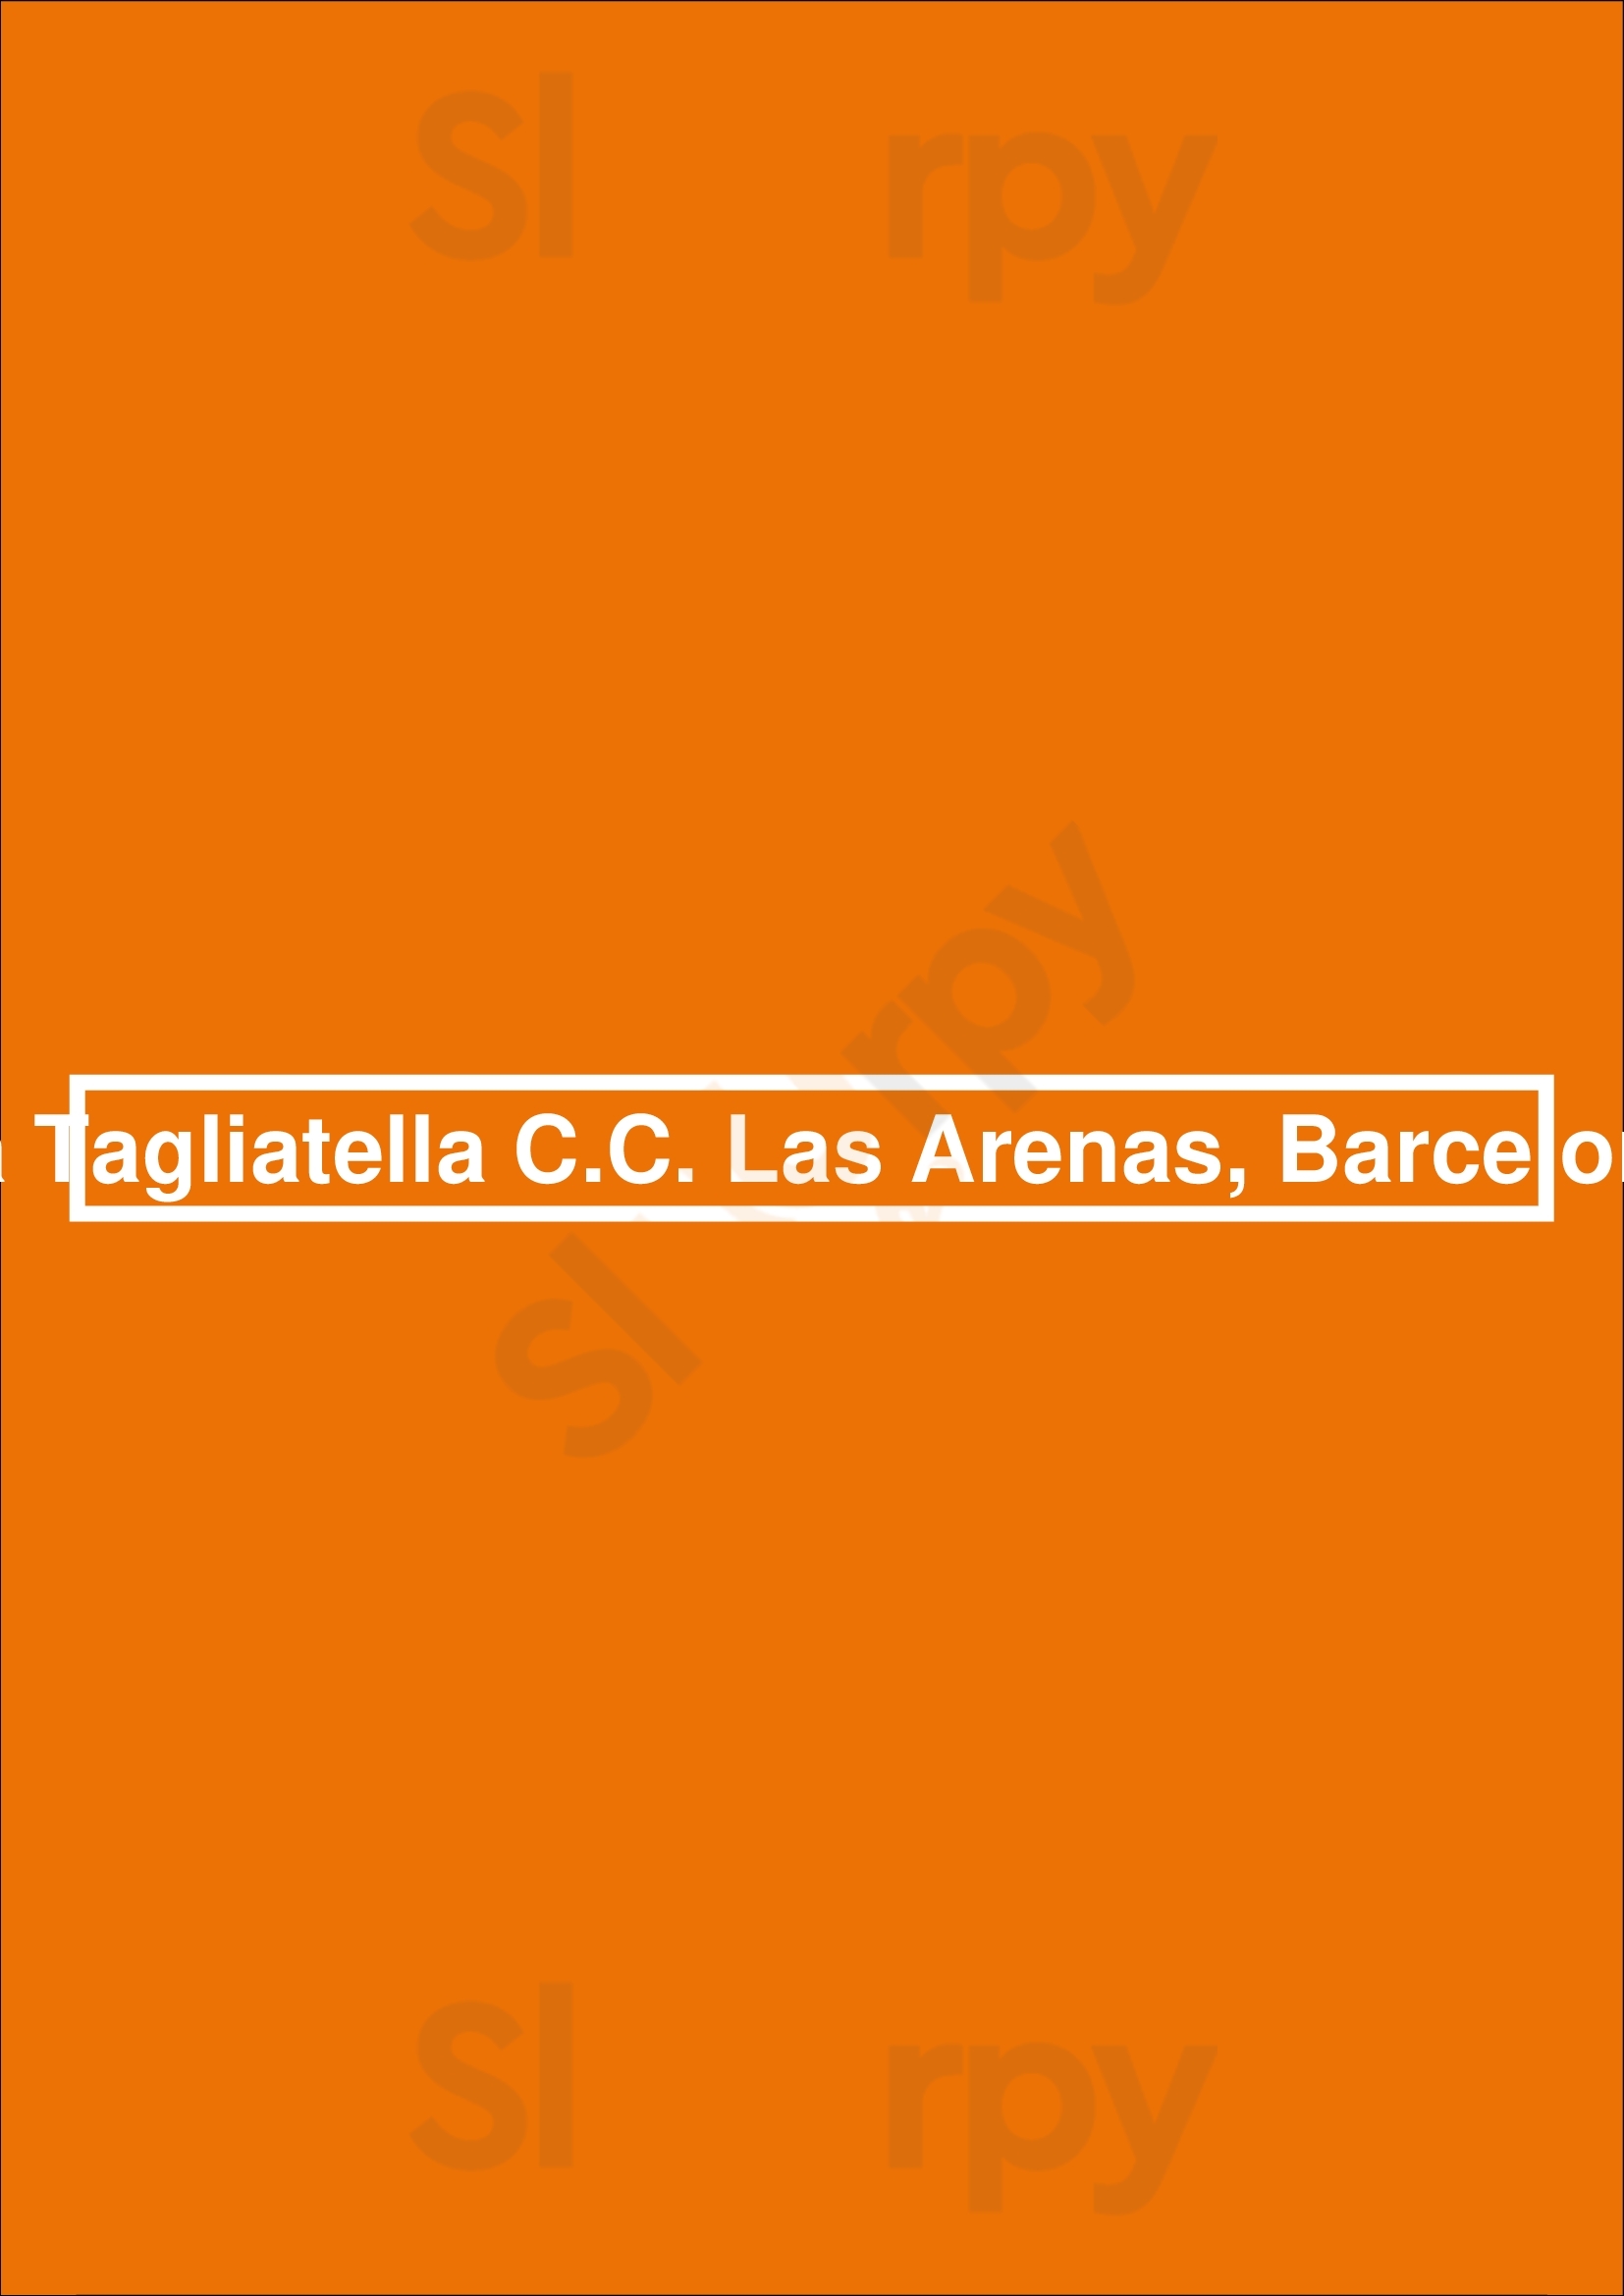 La Tagliatella C.c. Las Arenas, Barcelona Barcelona Menu - 1